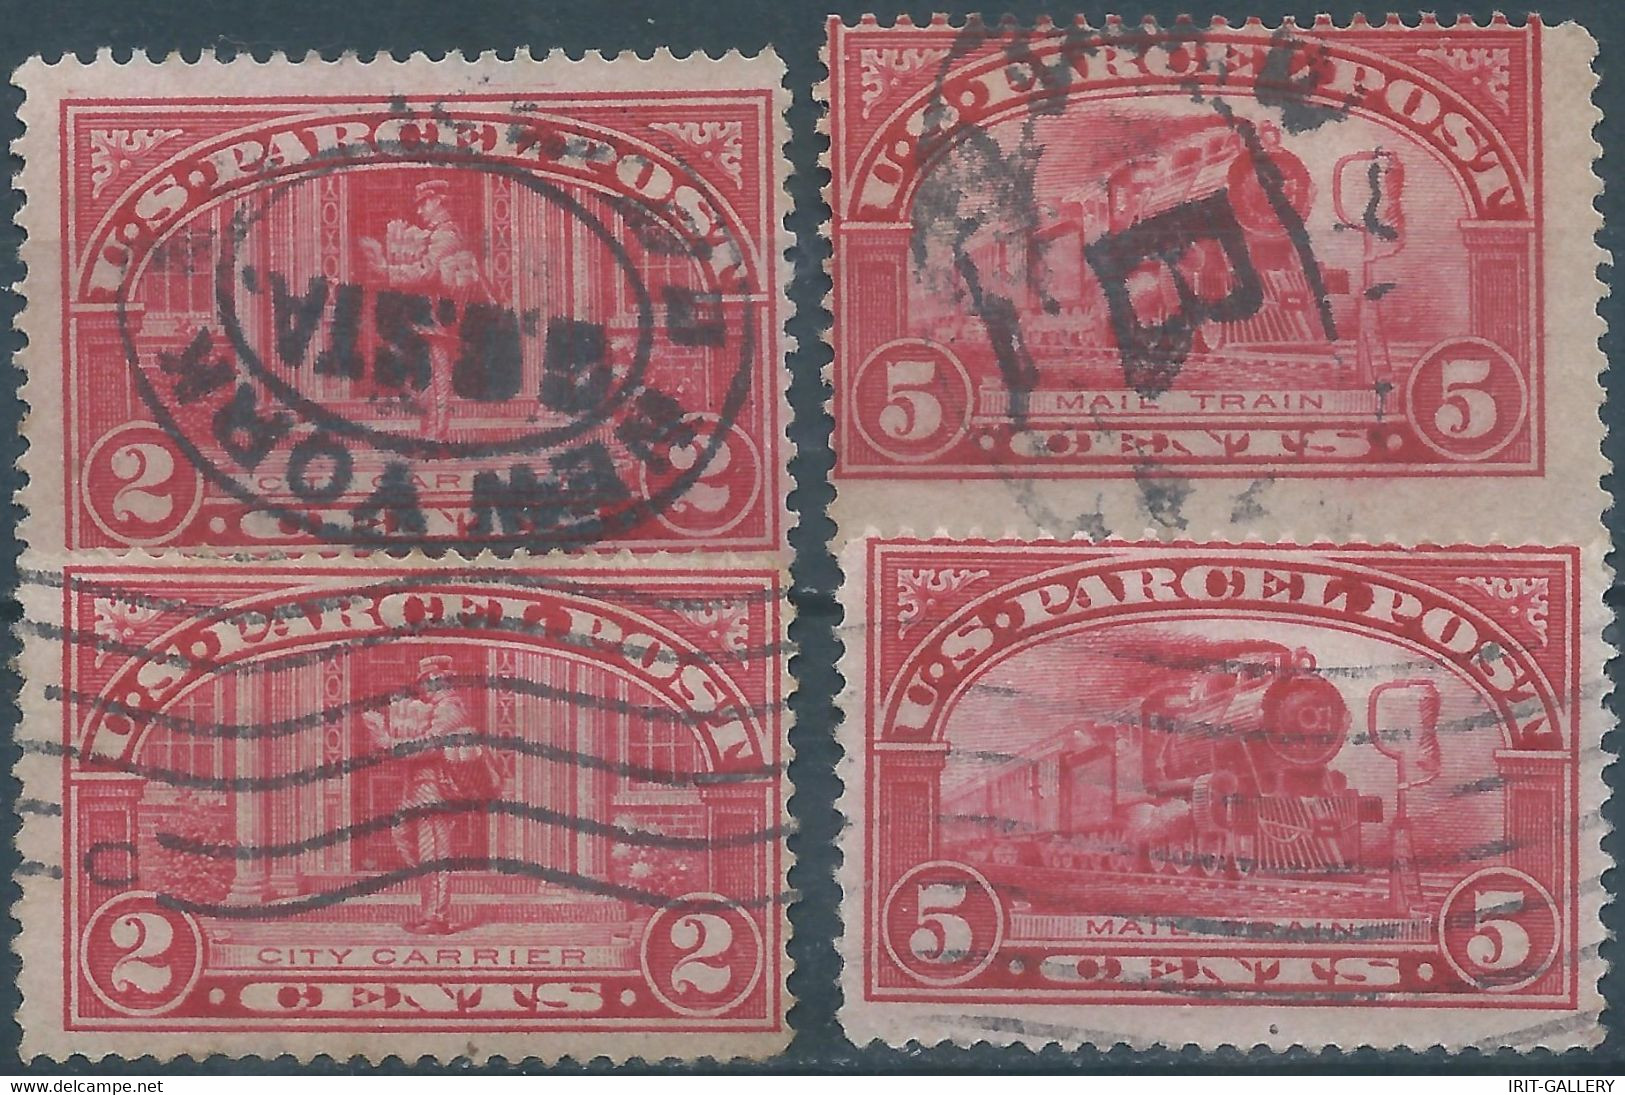 340-United States,U.S.A,Revenue Stamps PARCEL POST,2&5c,Used - Paketmarken